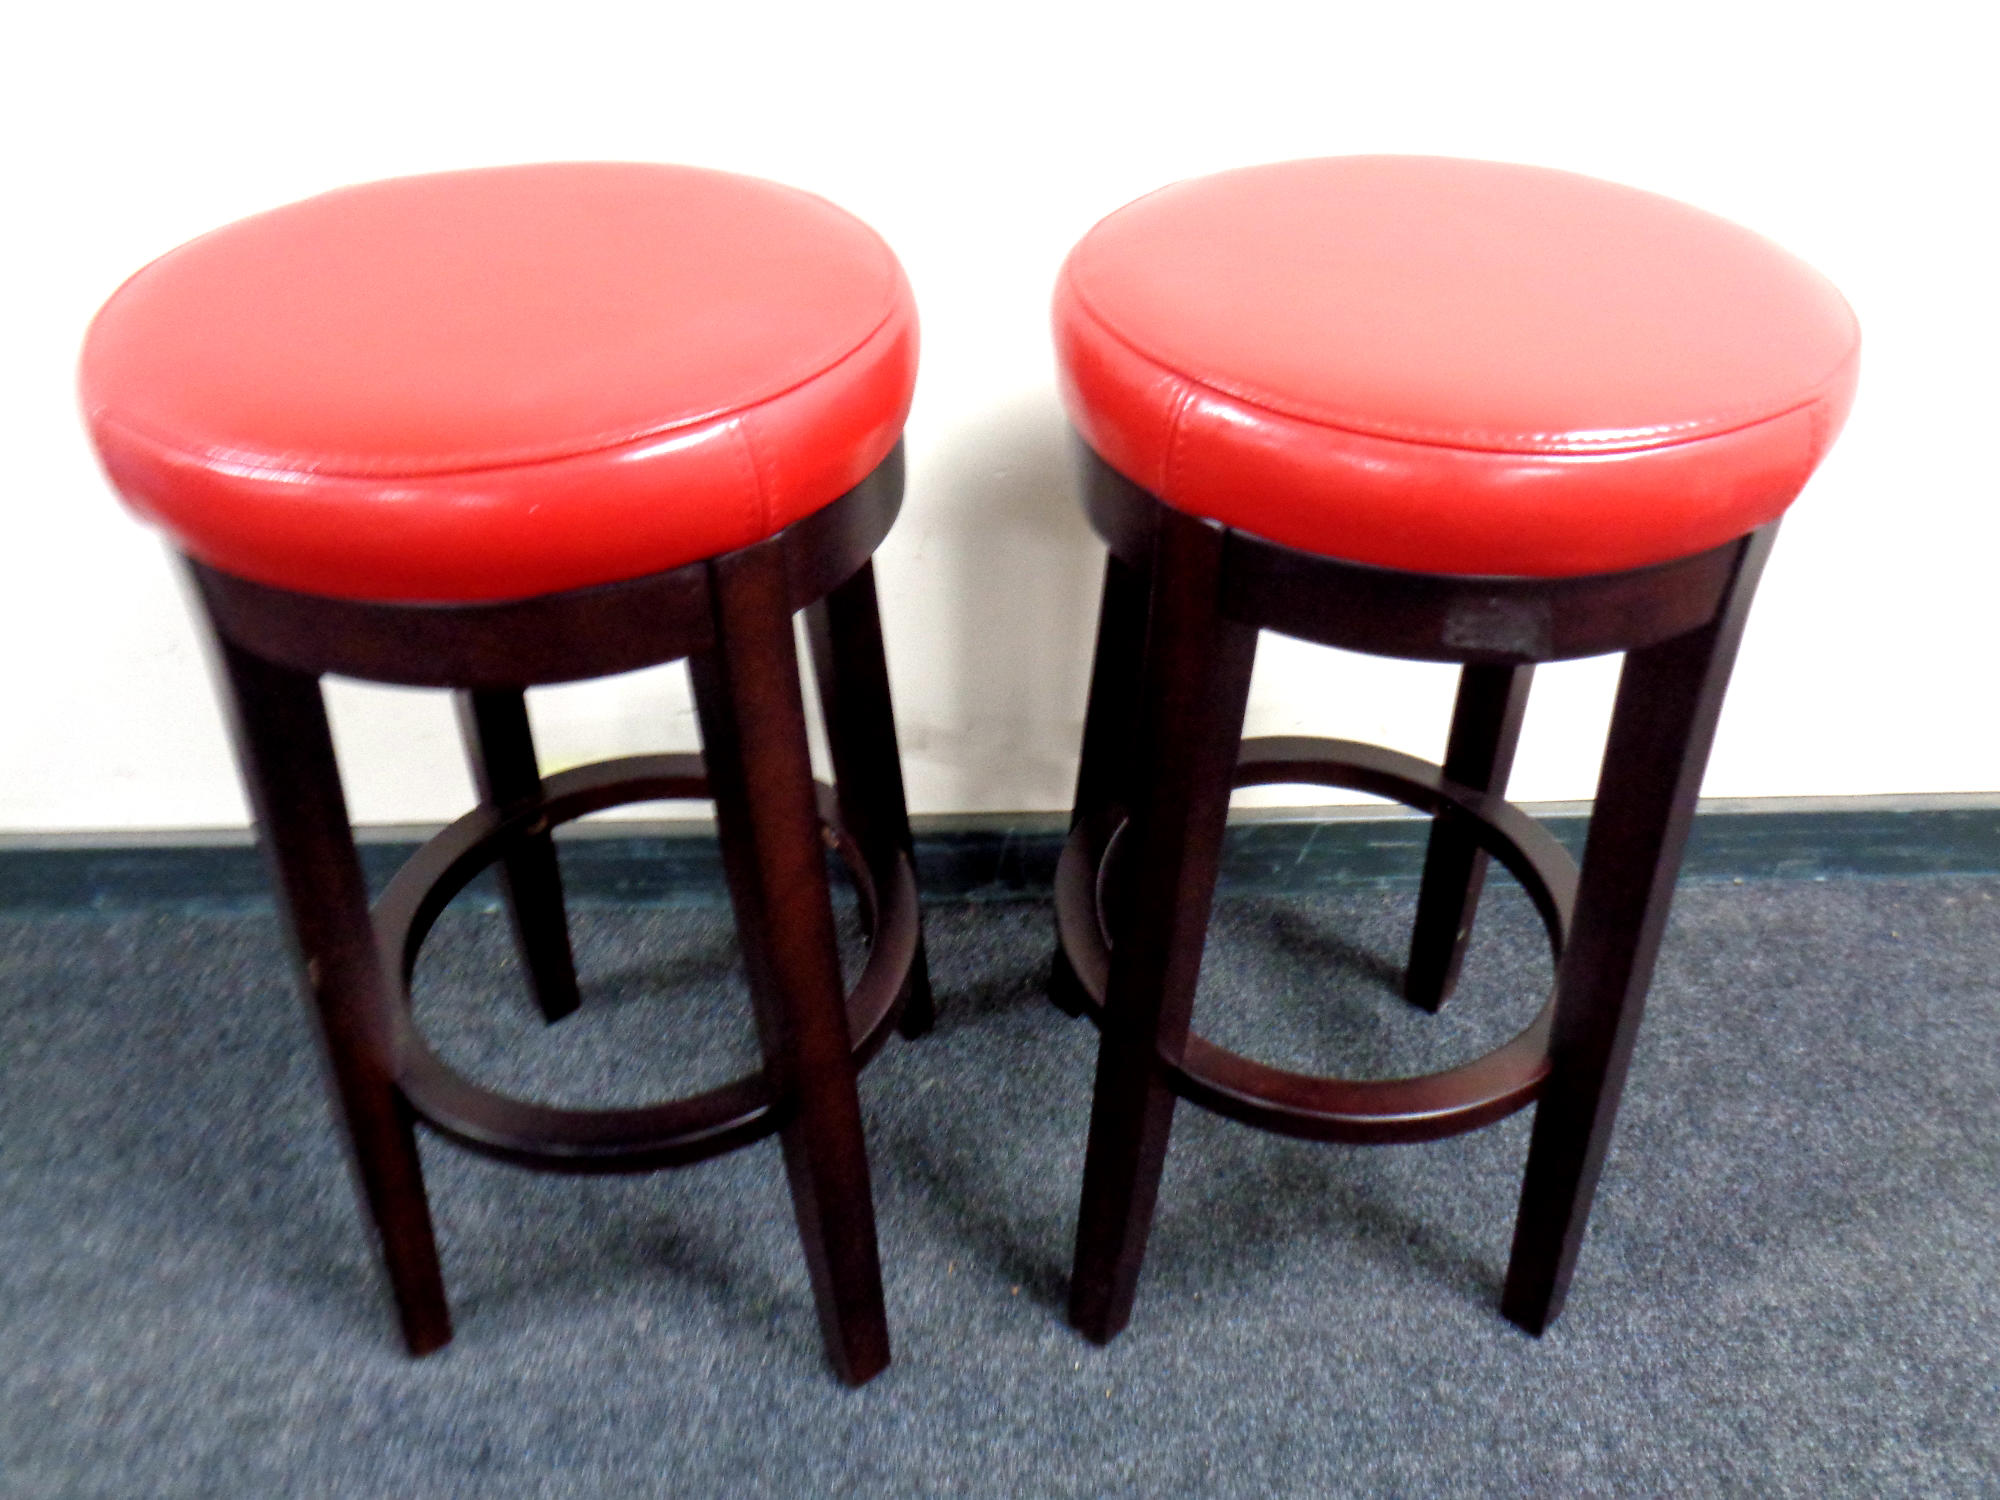 A pair of contemporary circular breakfast bar stools